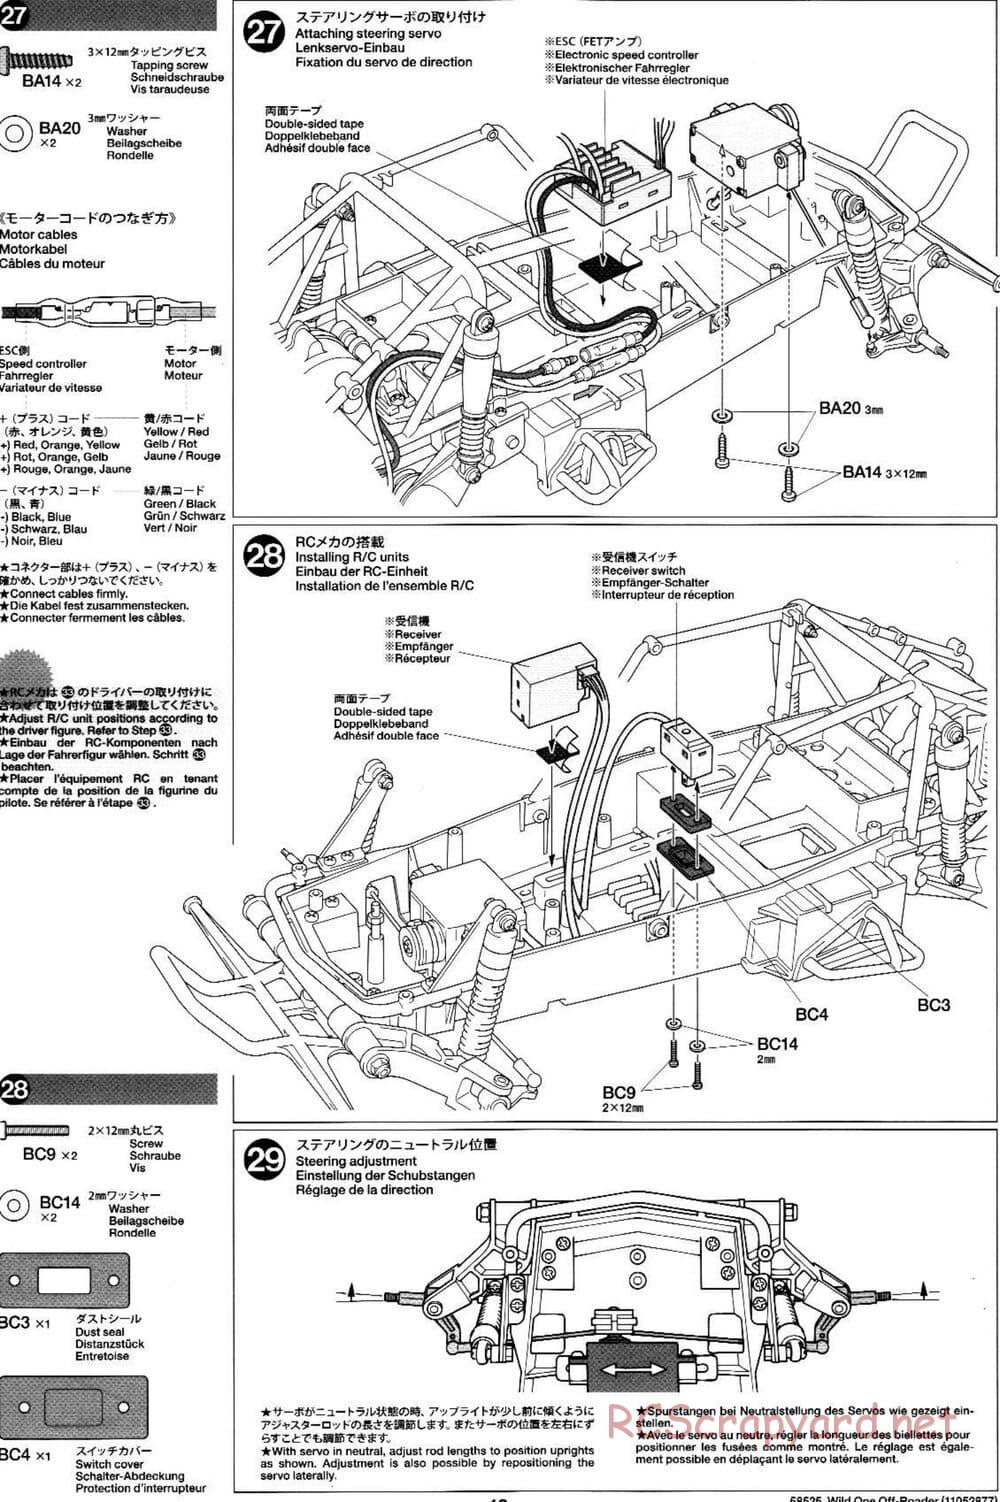 Tamiya - Wild One Off-Roader - FAV Chassis - Manual - Page 13